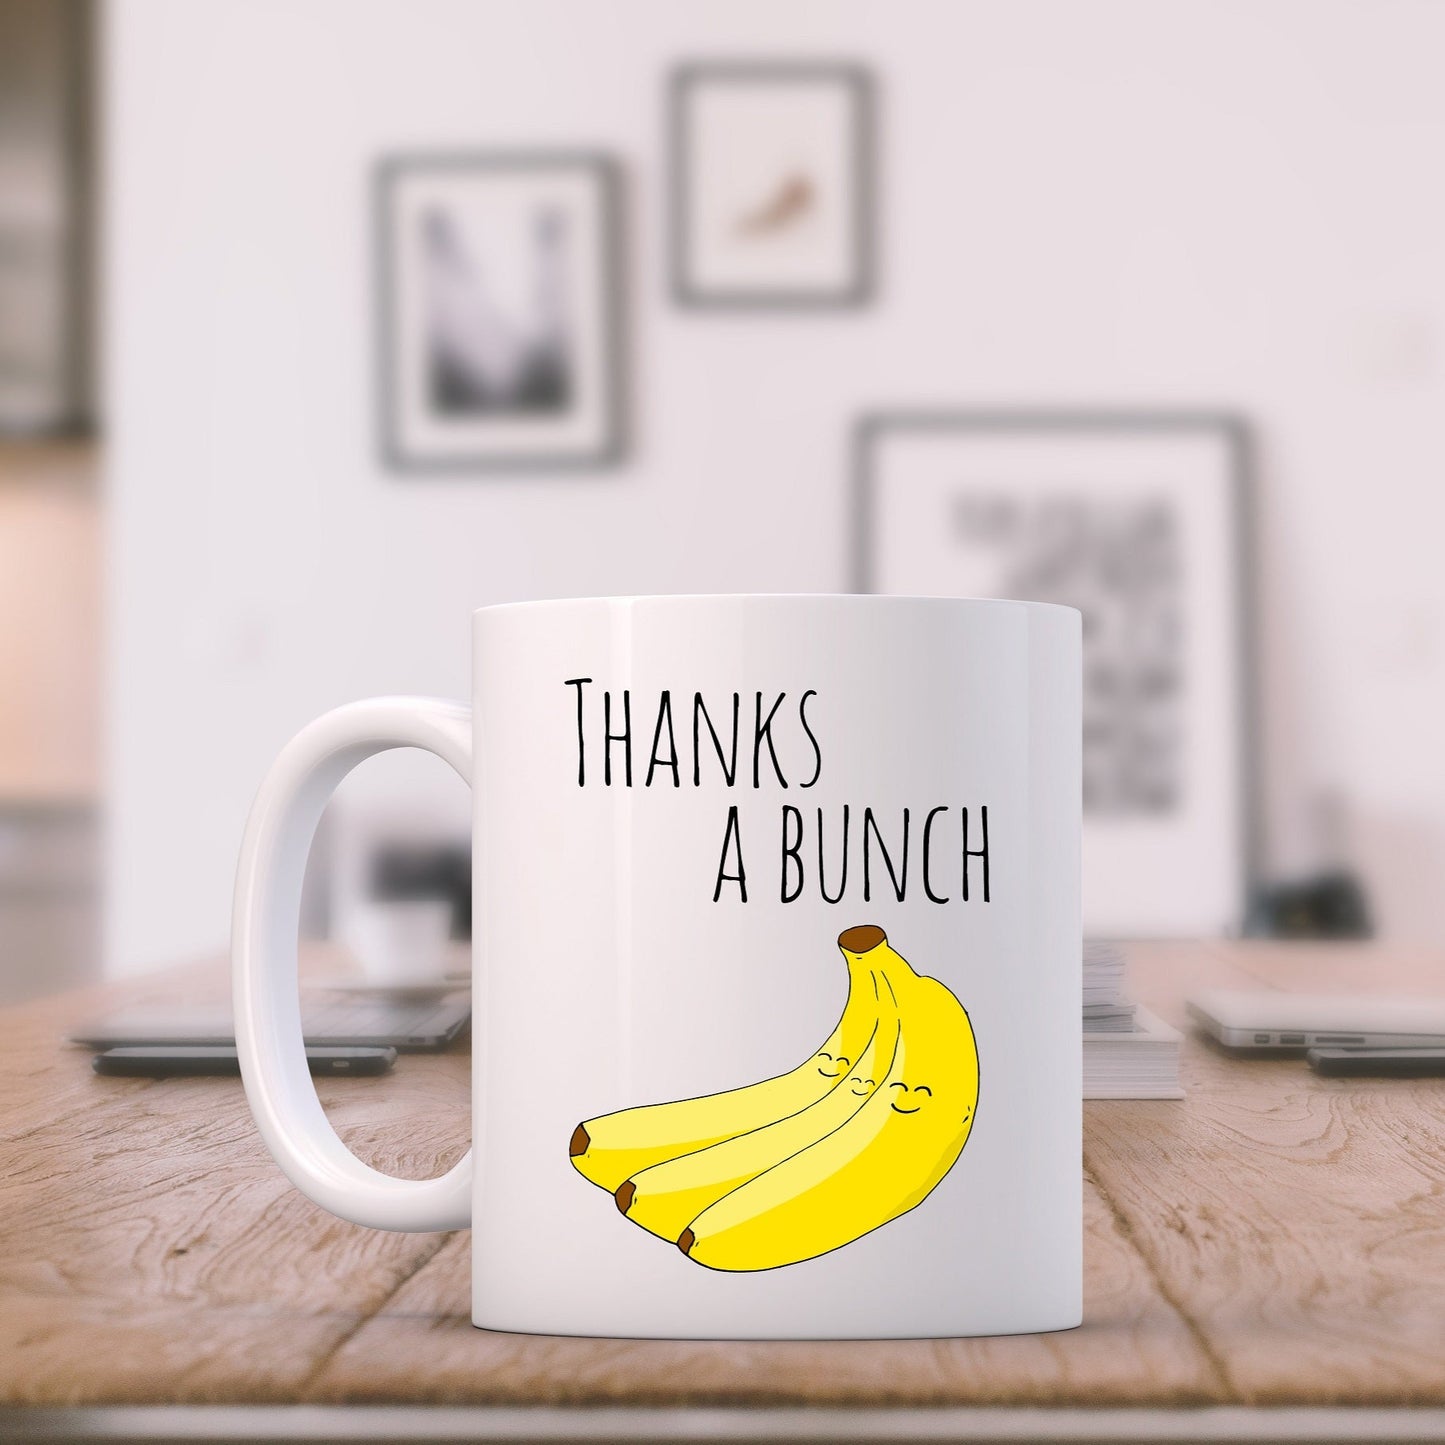 SALE - Thanks A Bunch (Bananas) - 11oz Ceramic Mug